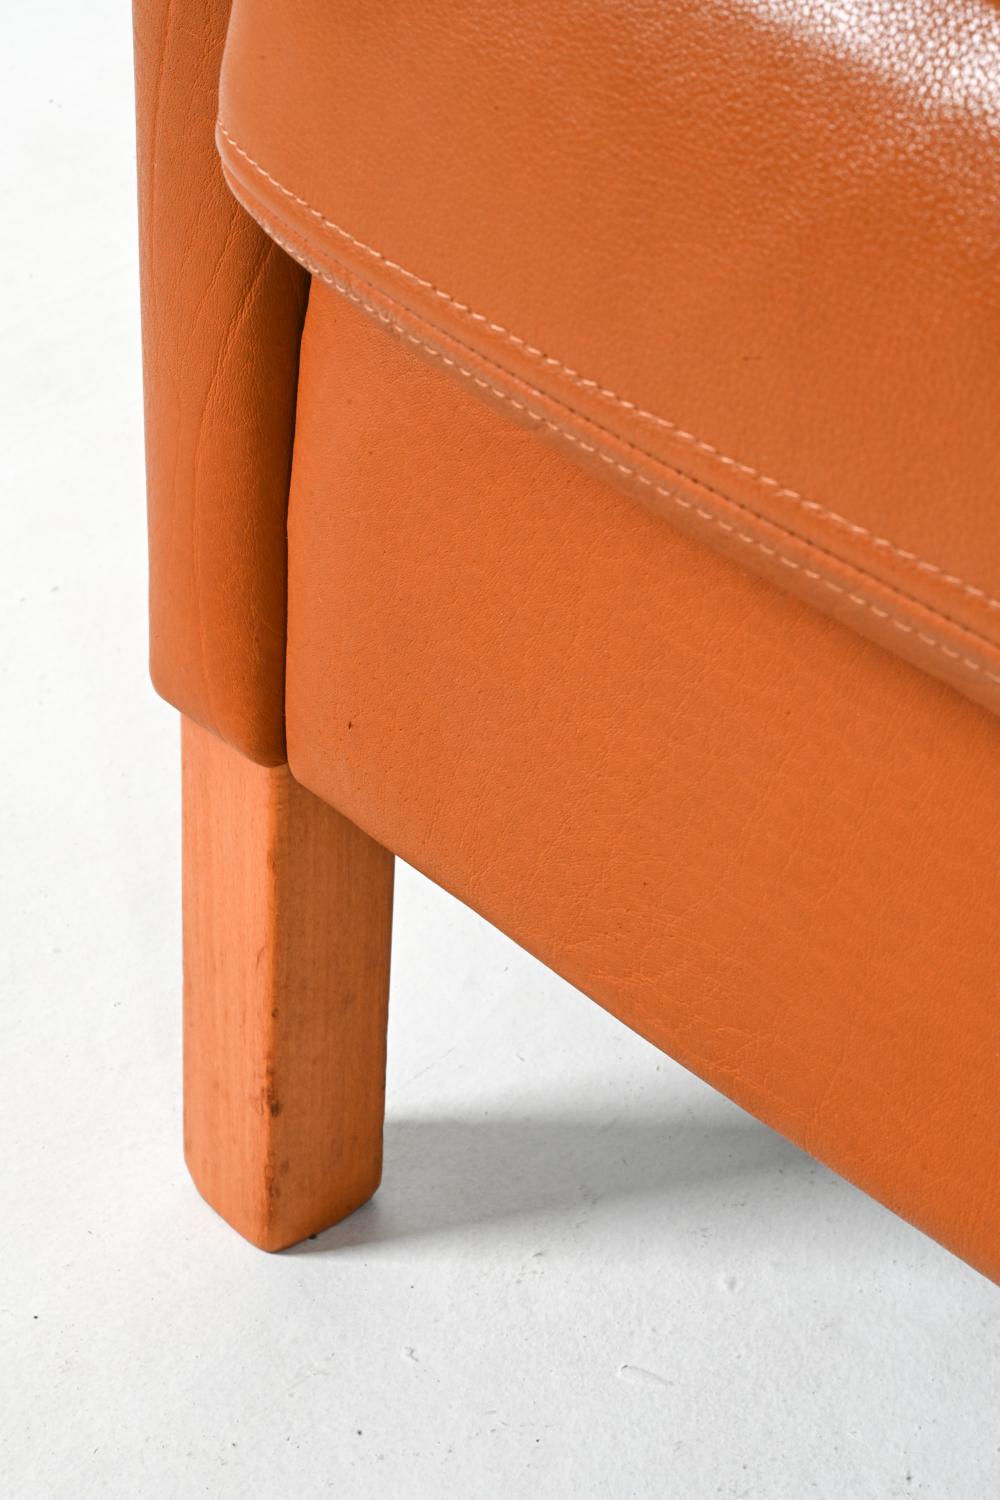 Mogens Hansen Model 535 Danish Modern Three-Seat Sofa in Leather & Oak For Sale 2